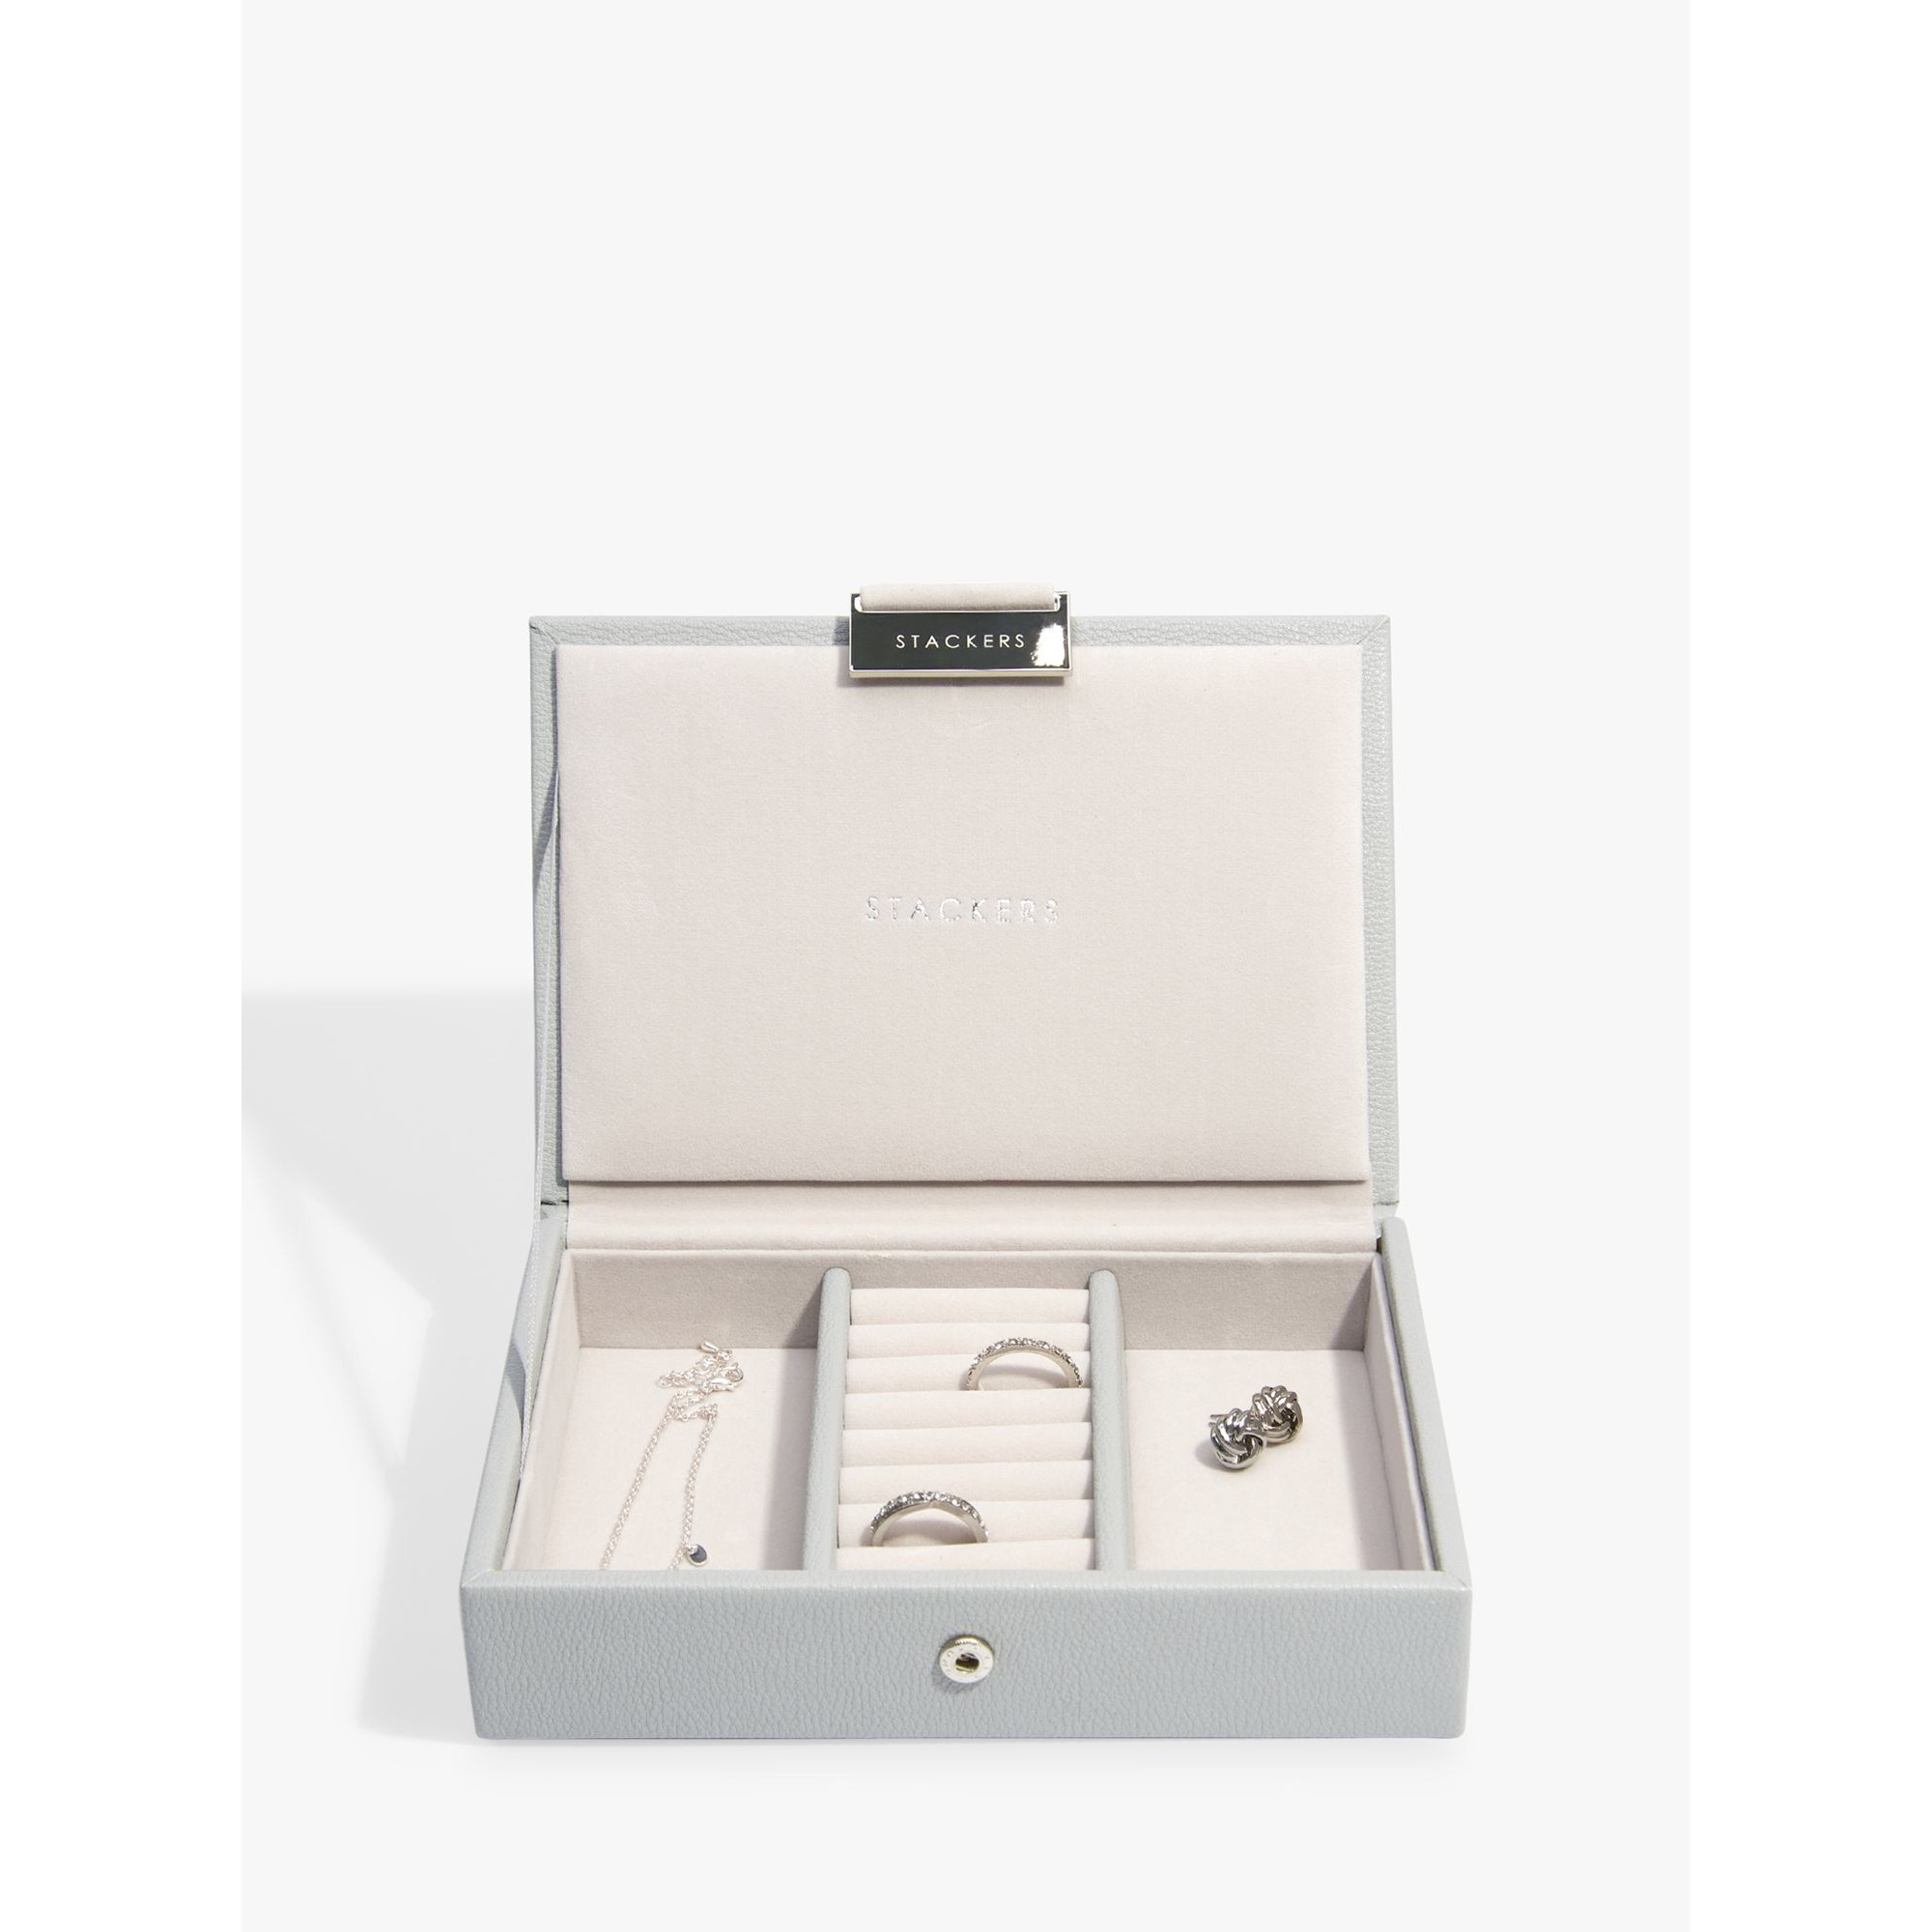 Stackers Mini Jewellery Box Lid - image 1